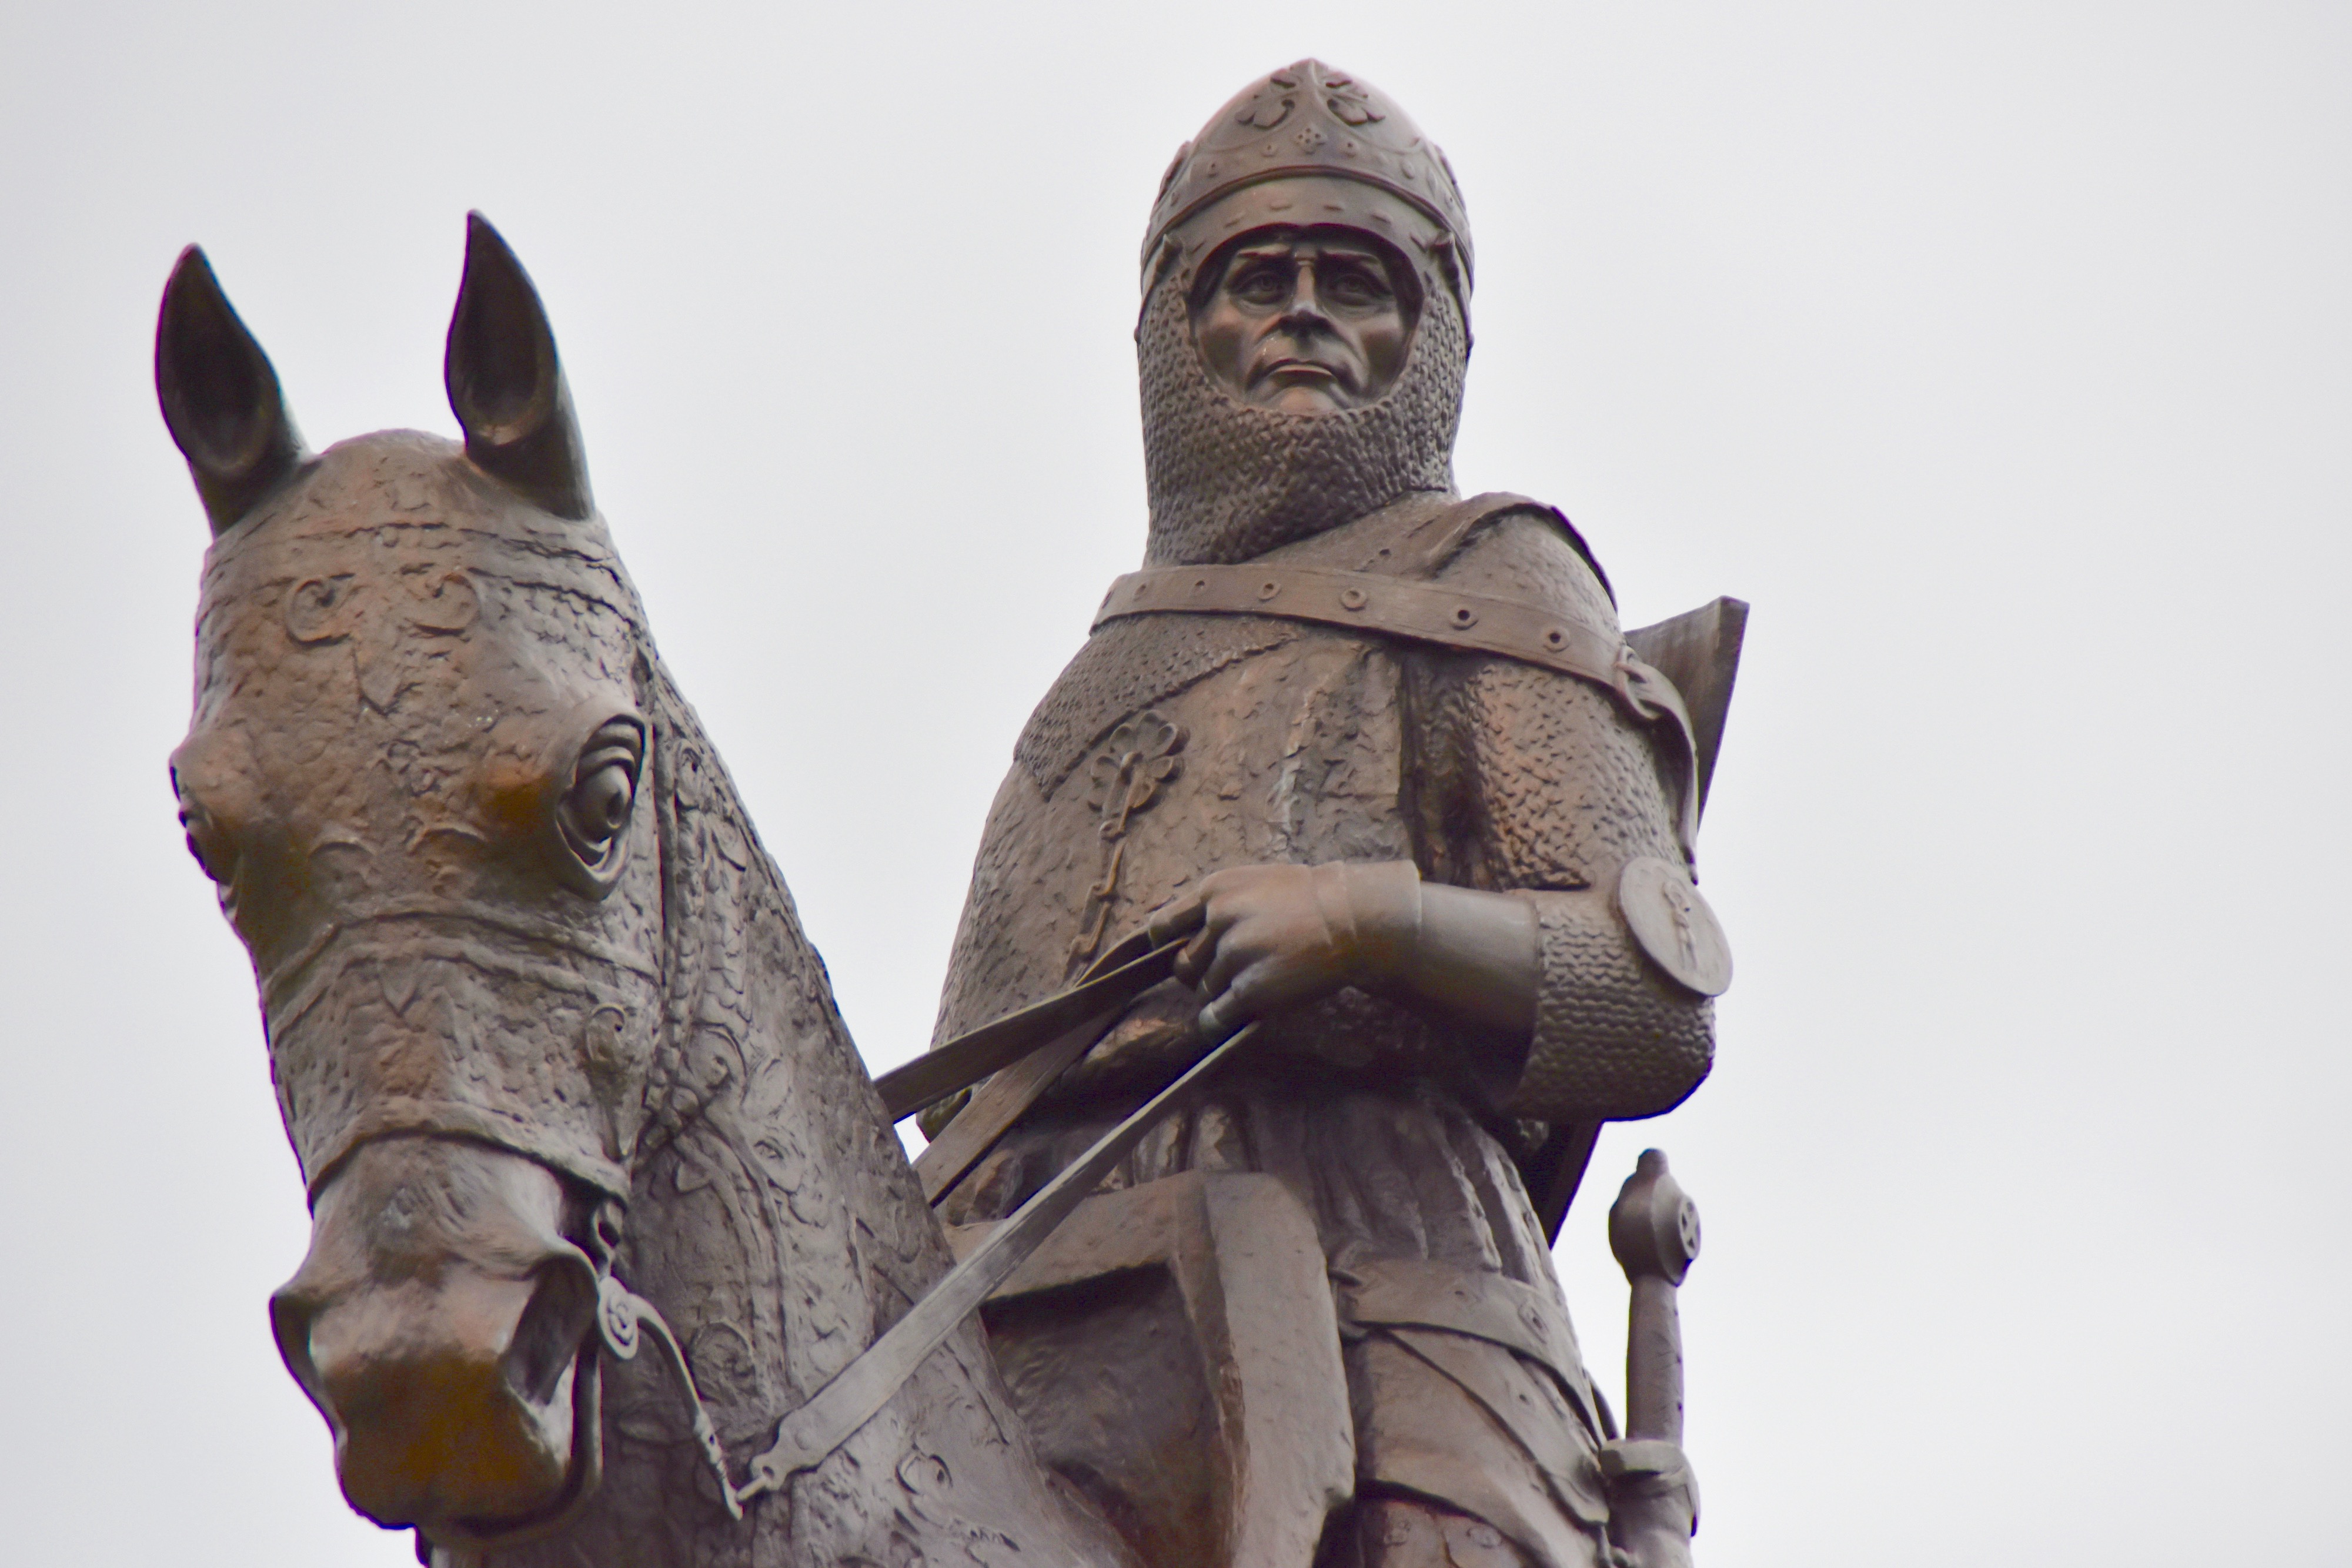 Face of Robert the Bruce at Bannockburn